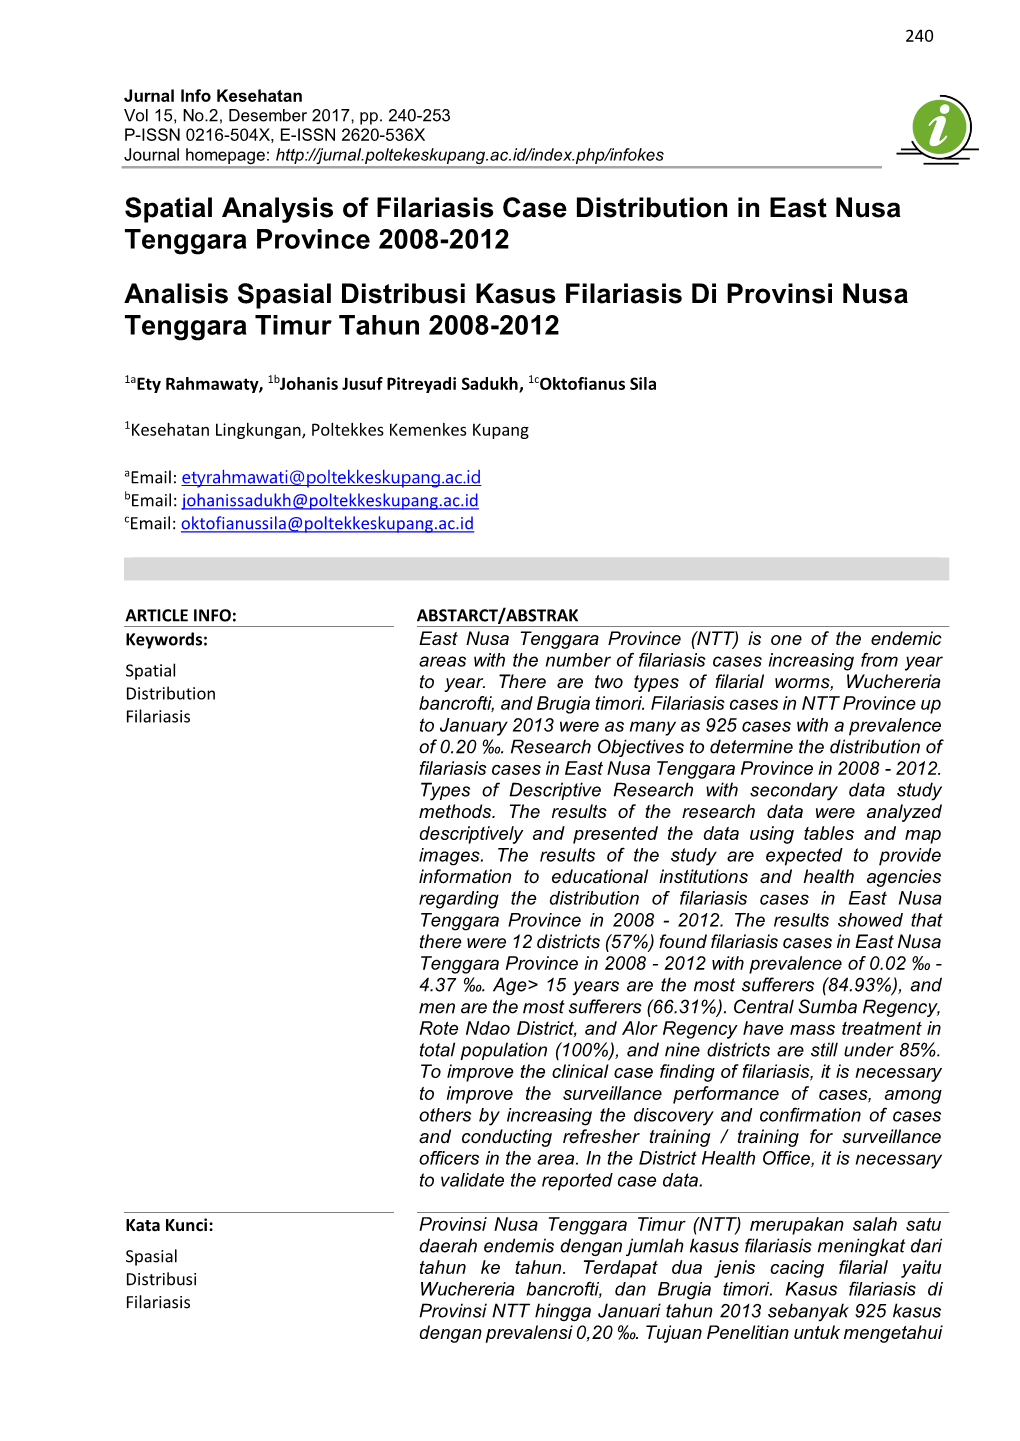 Spatial Analysis of Filariasis Case Distribution in East Nusa Tenggara Province 2008-2012